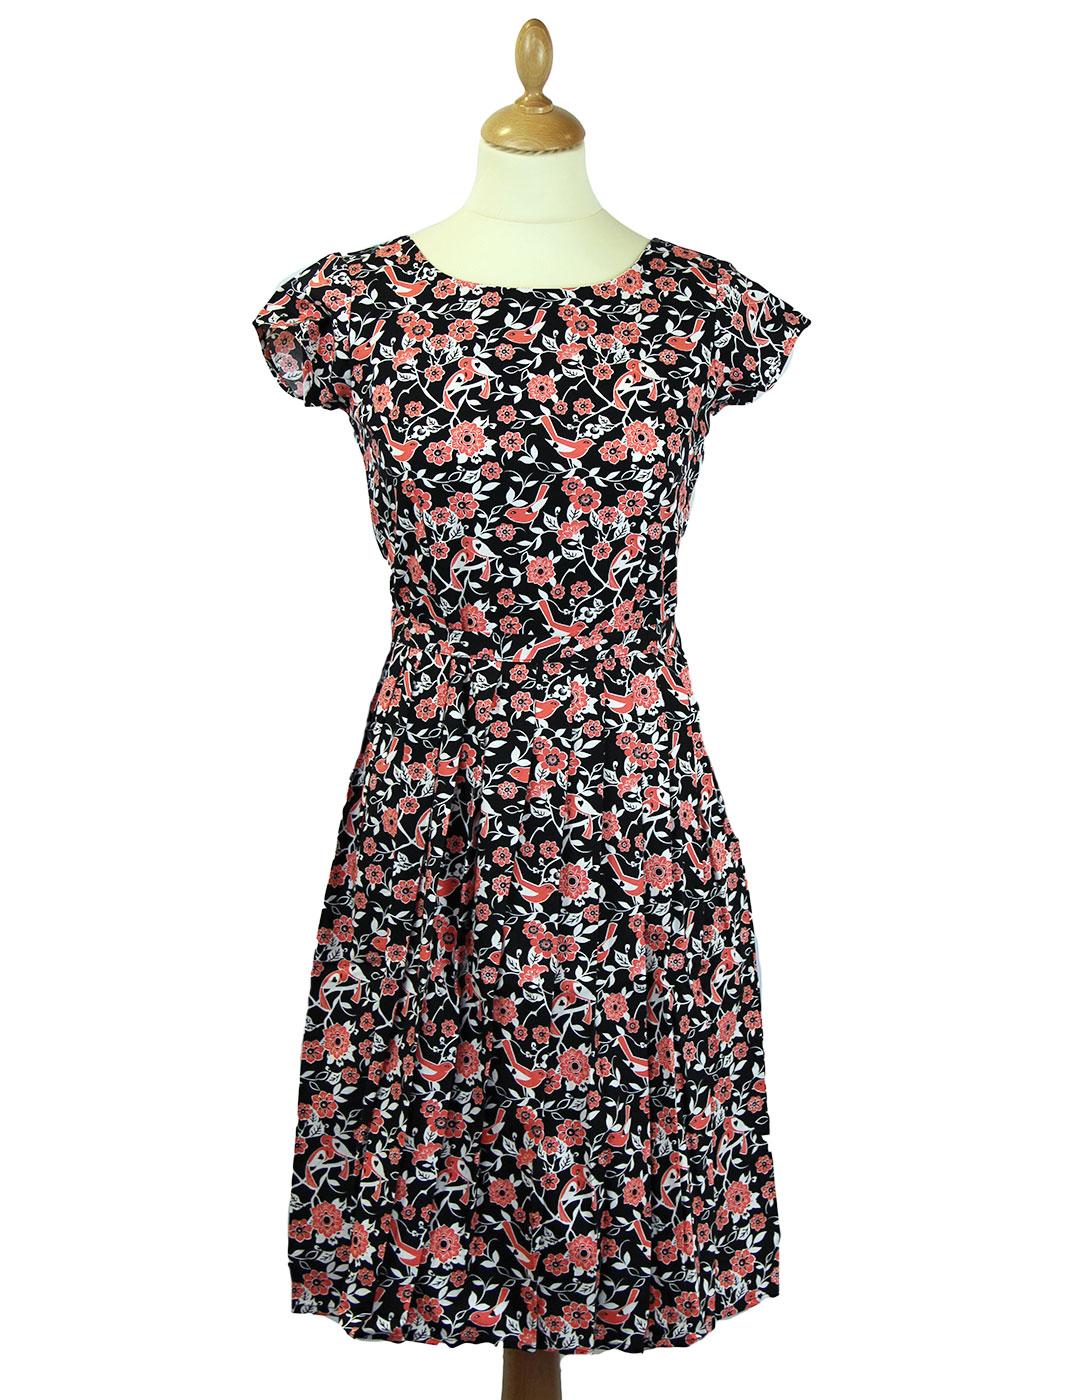 Love Birds Retro 1950s Vintage Summer Tea Dress in Black/Pink